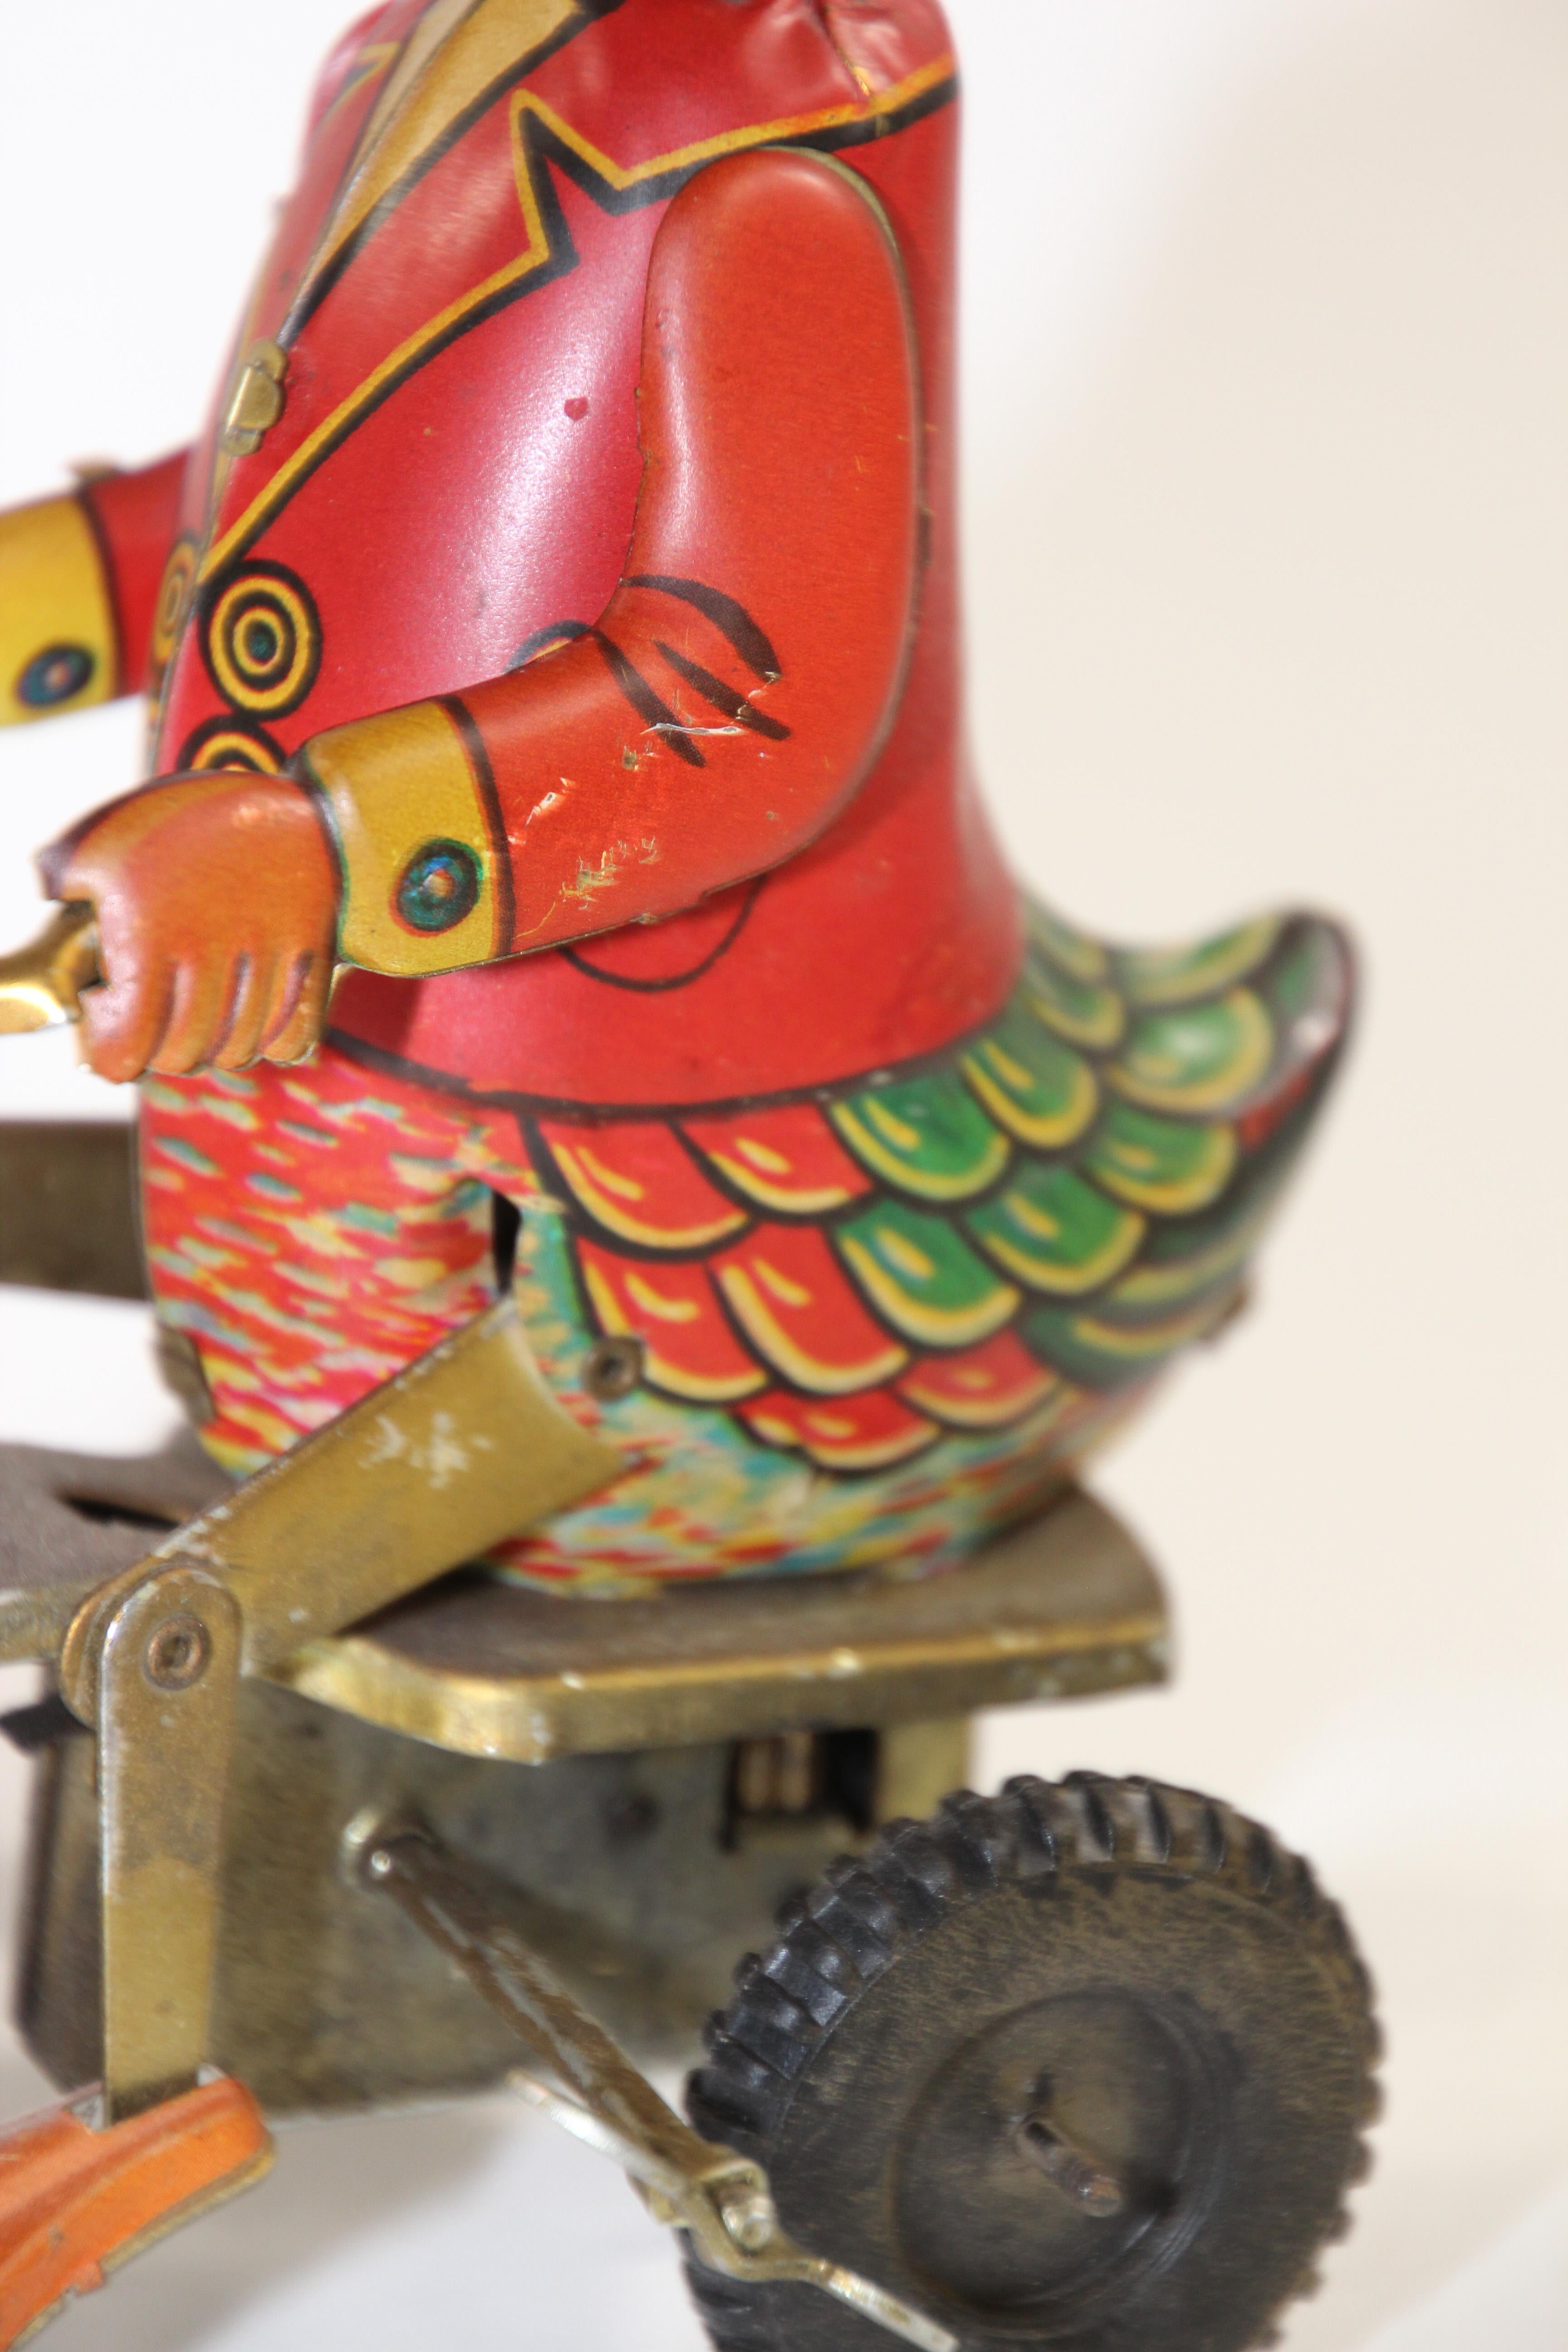 Metal Vintage Mechanical Hand-Painted Wind-Up Duck on Bike